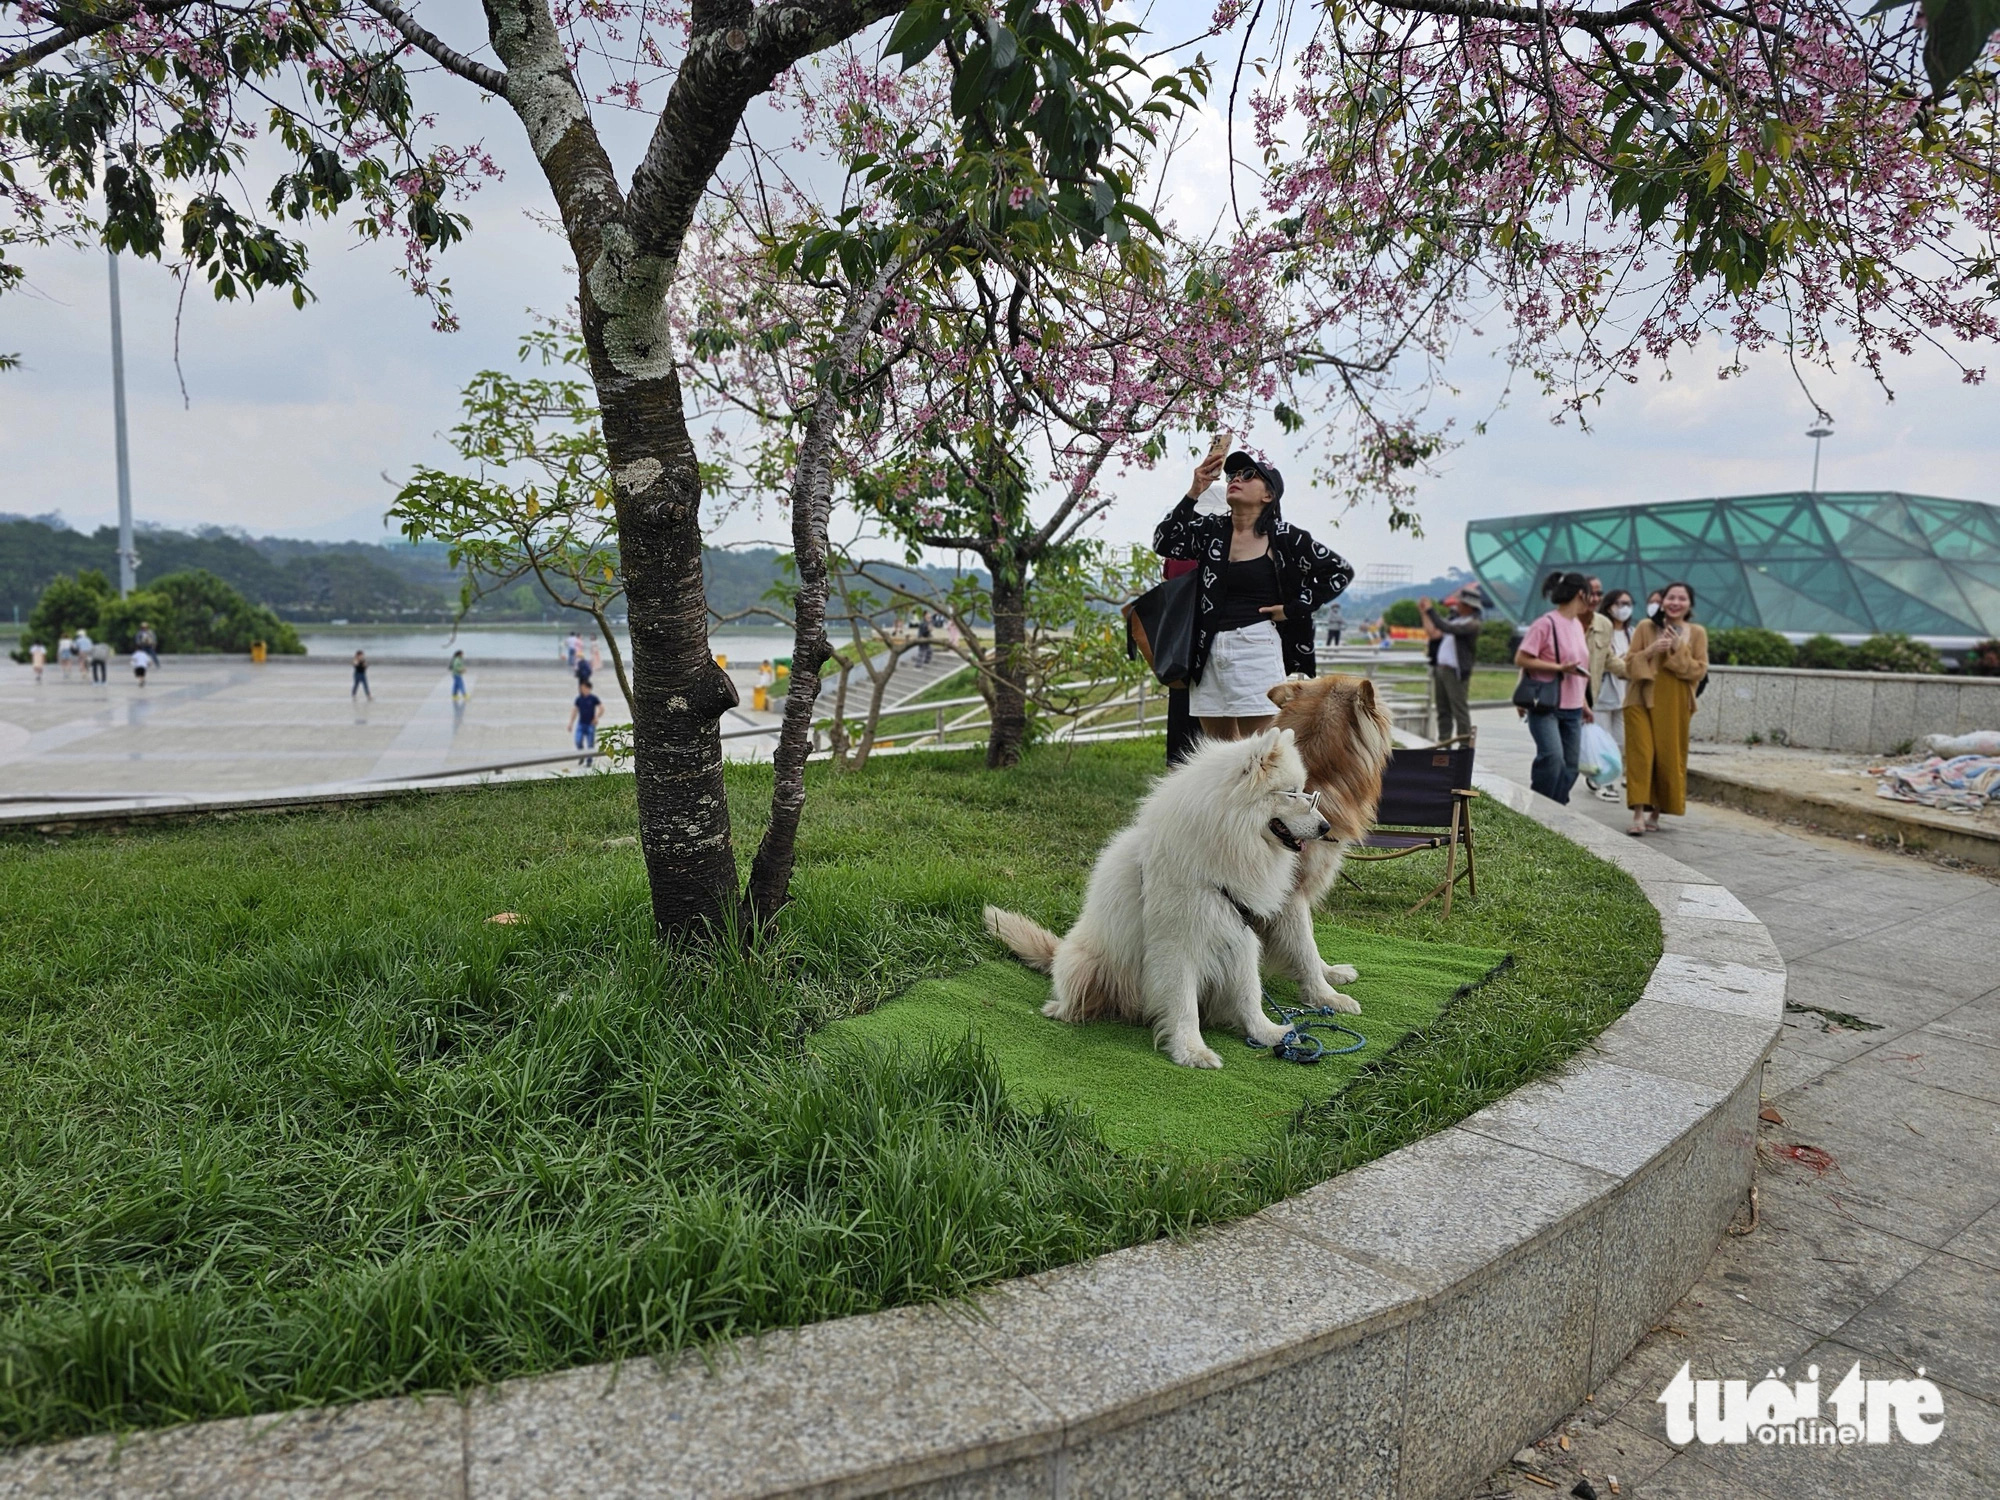 Vietnam’s Da Lat cracks down on illegal pet photo ops under public blossom trees